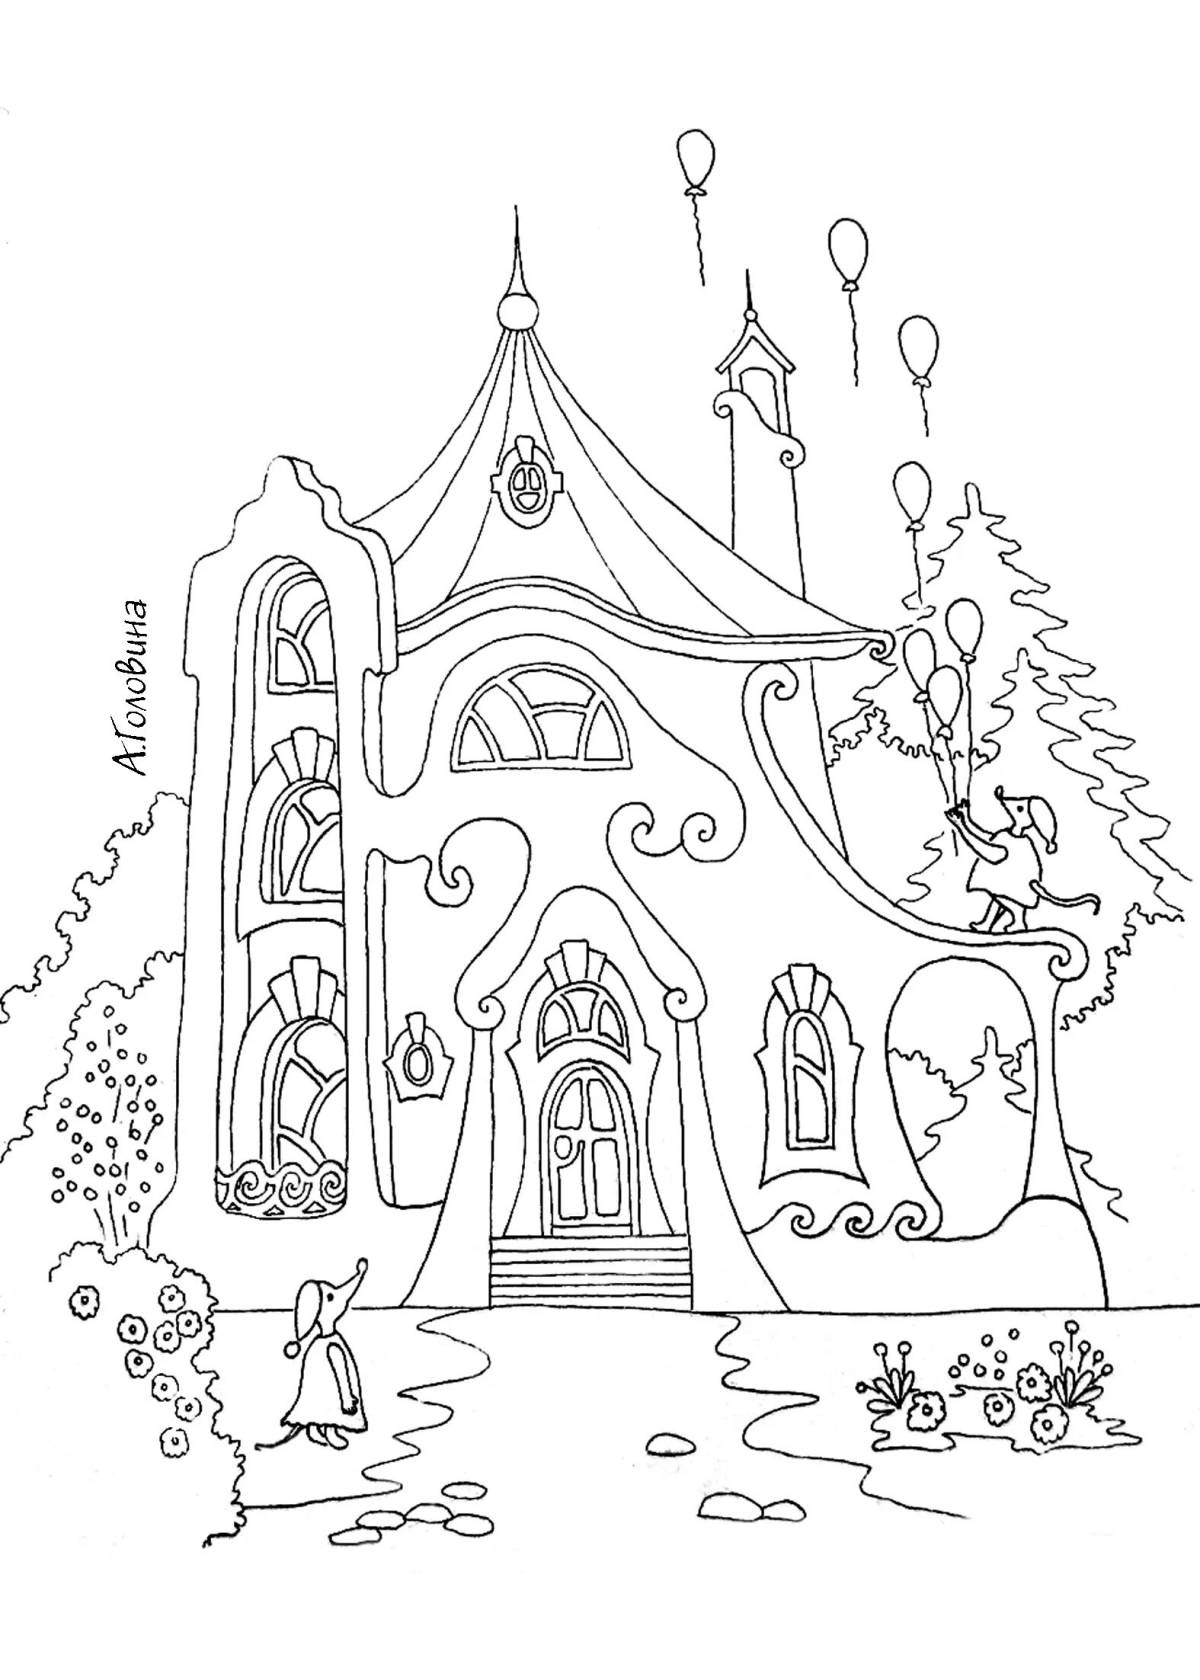 Fairy palace for preschool kids #5